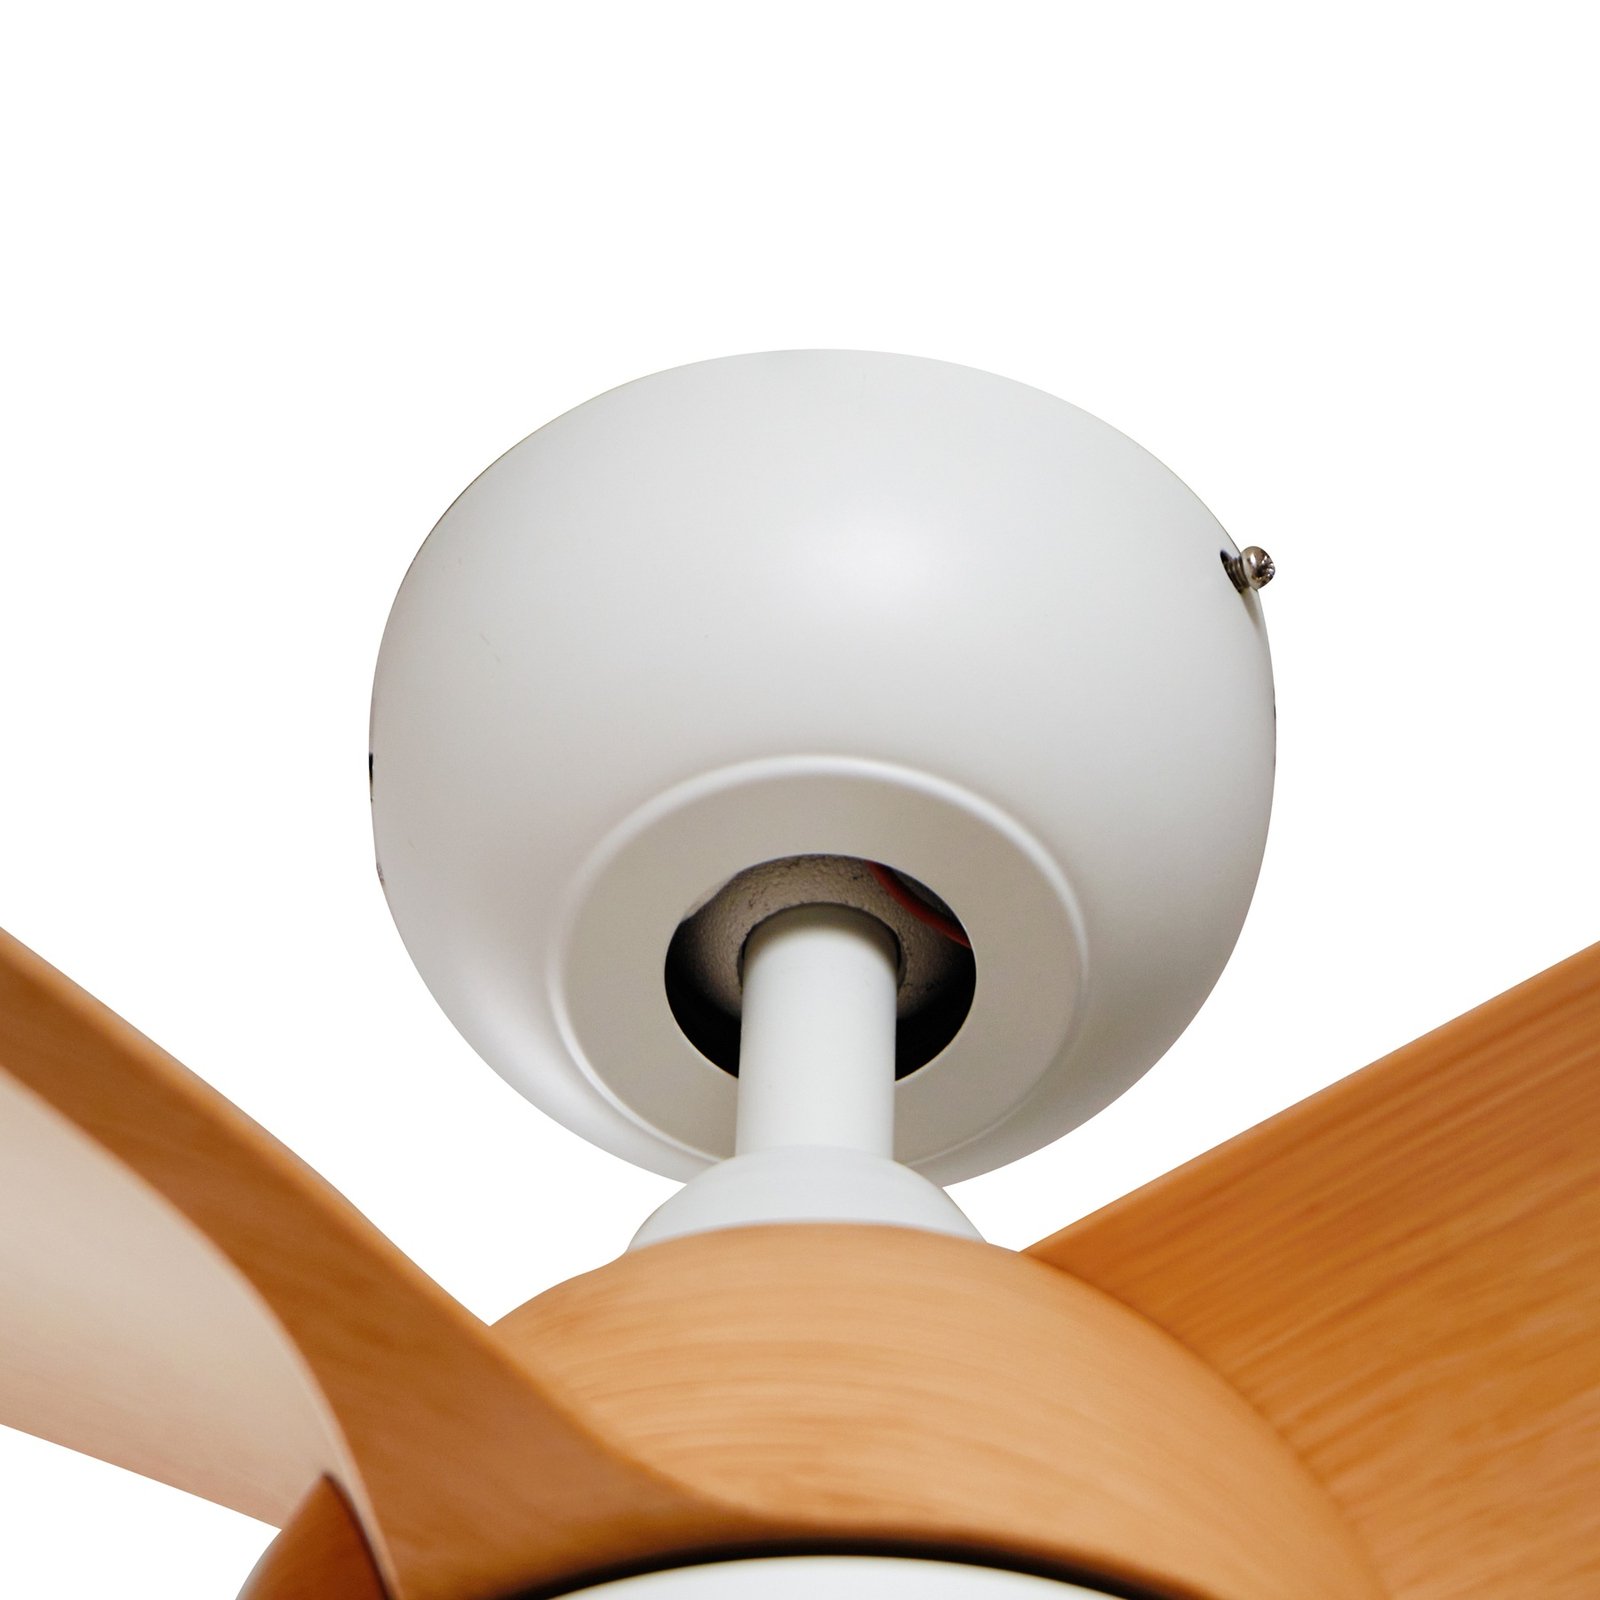 Lindby LED griestu ventilators Enon, balta/koka krāsa, līdzstrāva, kluss